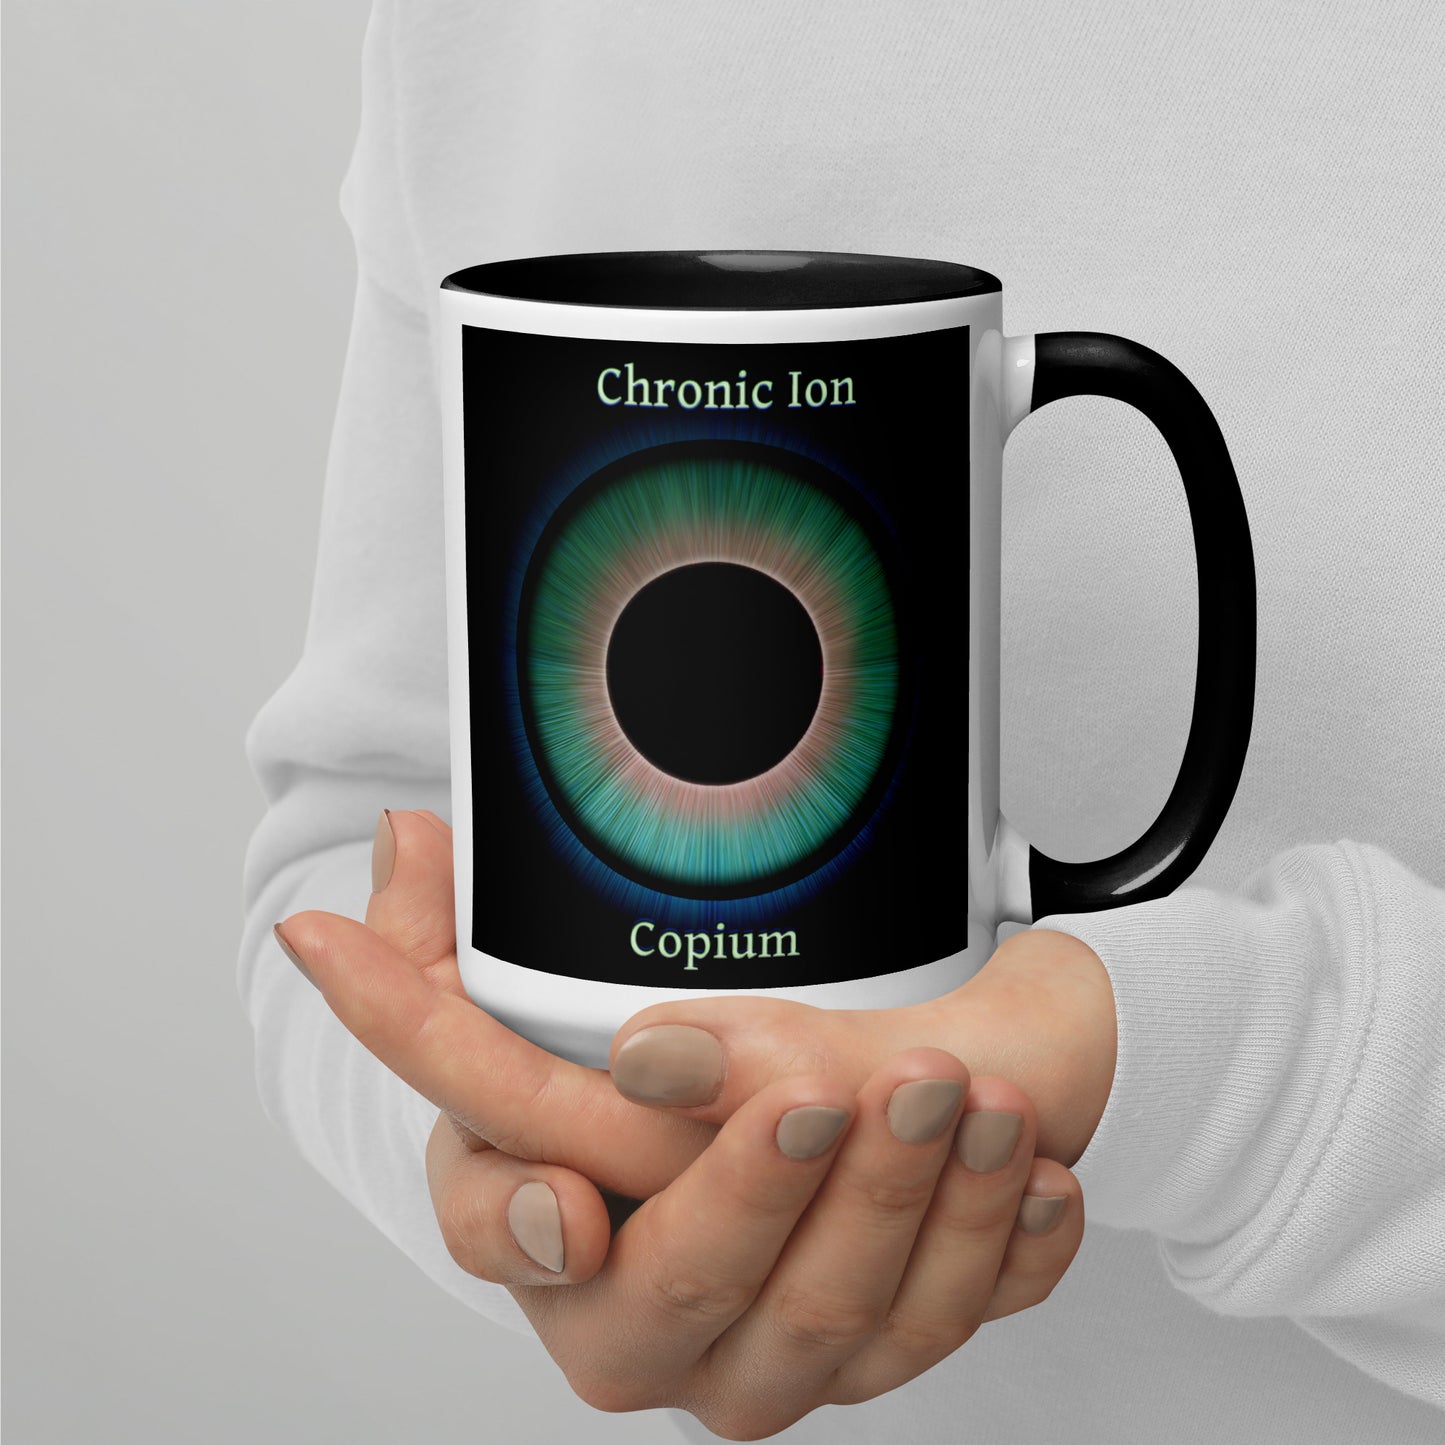 Chronic Ion - Copium Mug With Color Inside